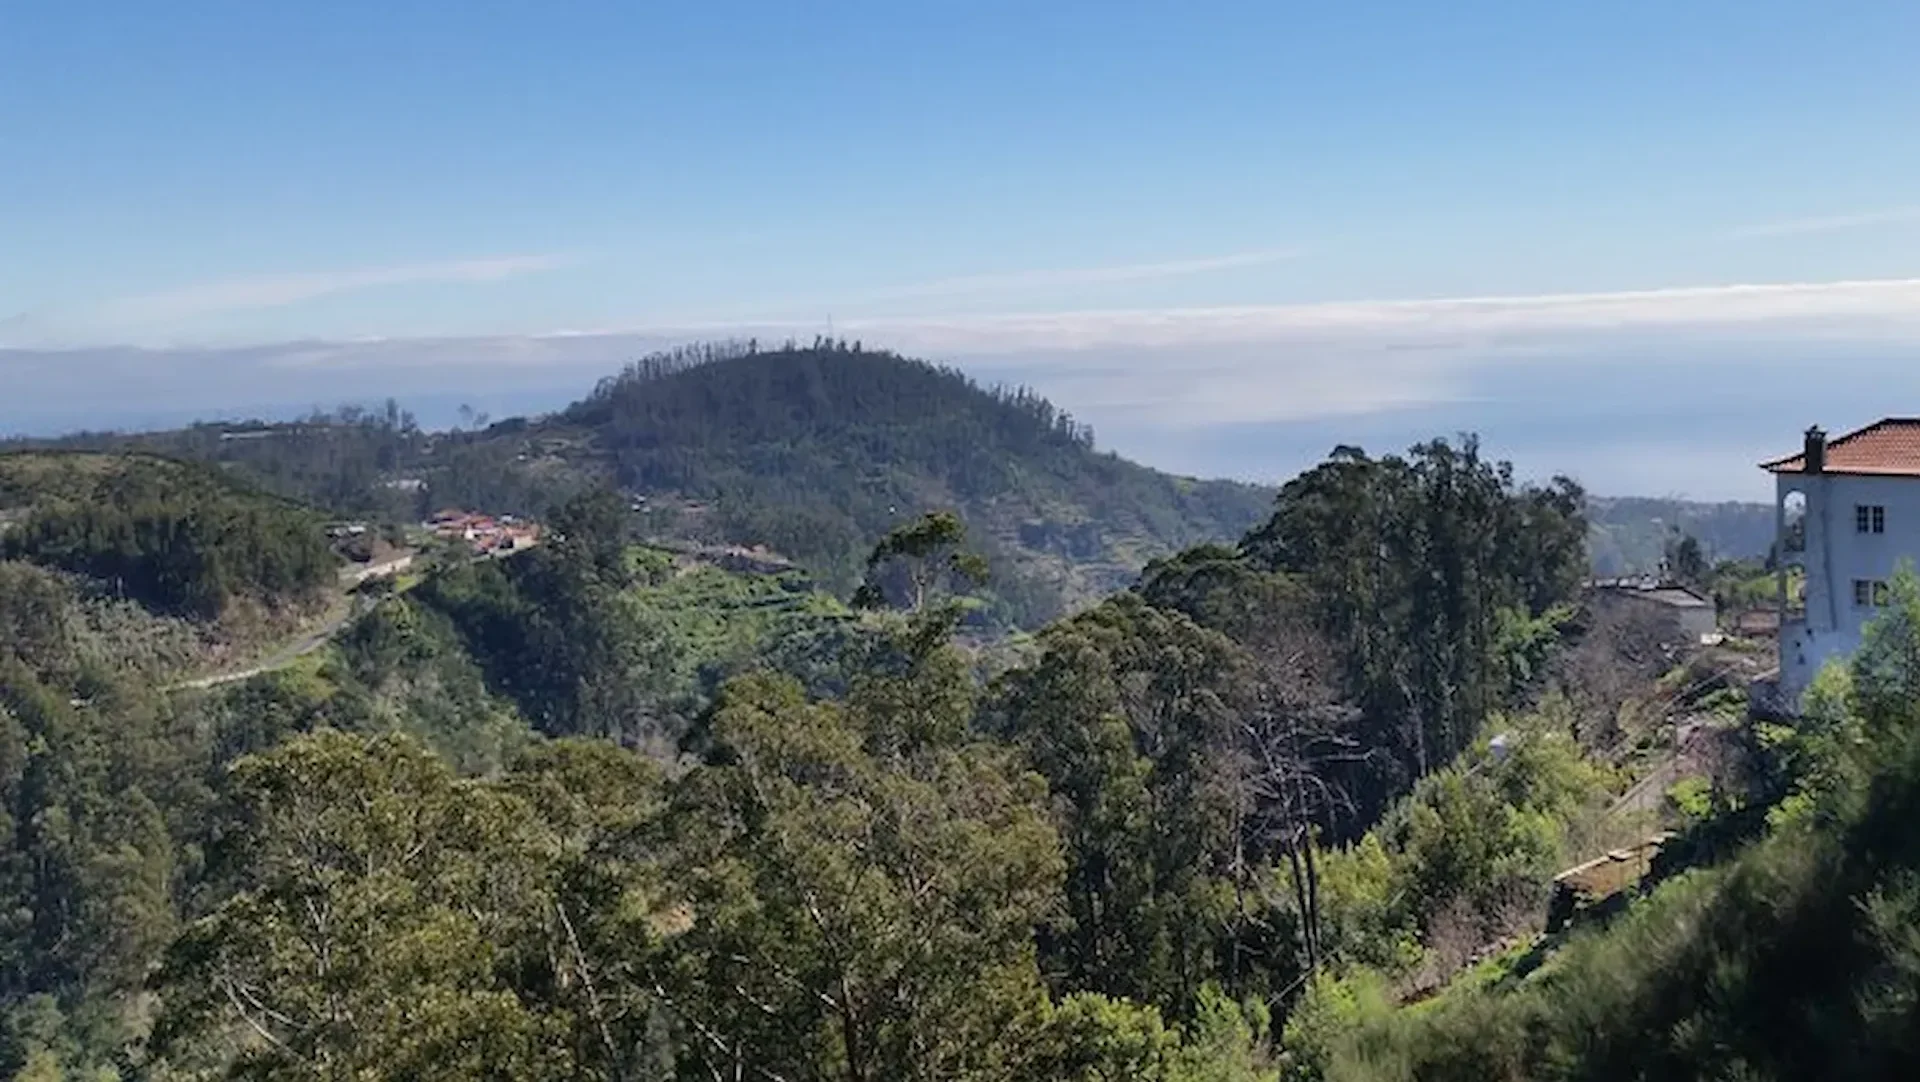 Madeira Island Walks Paradise Valley